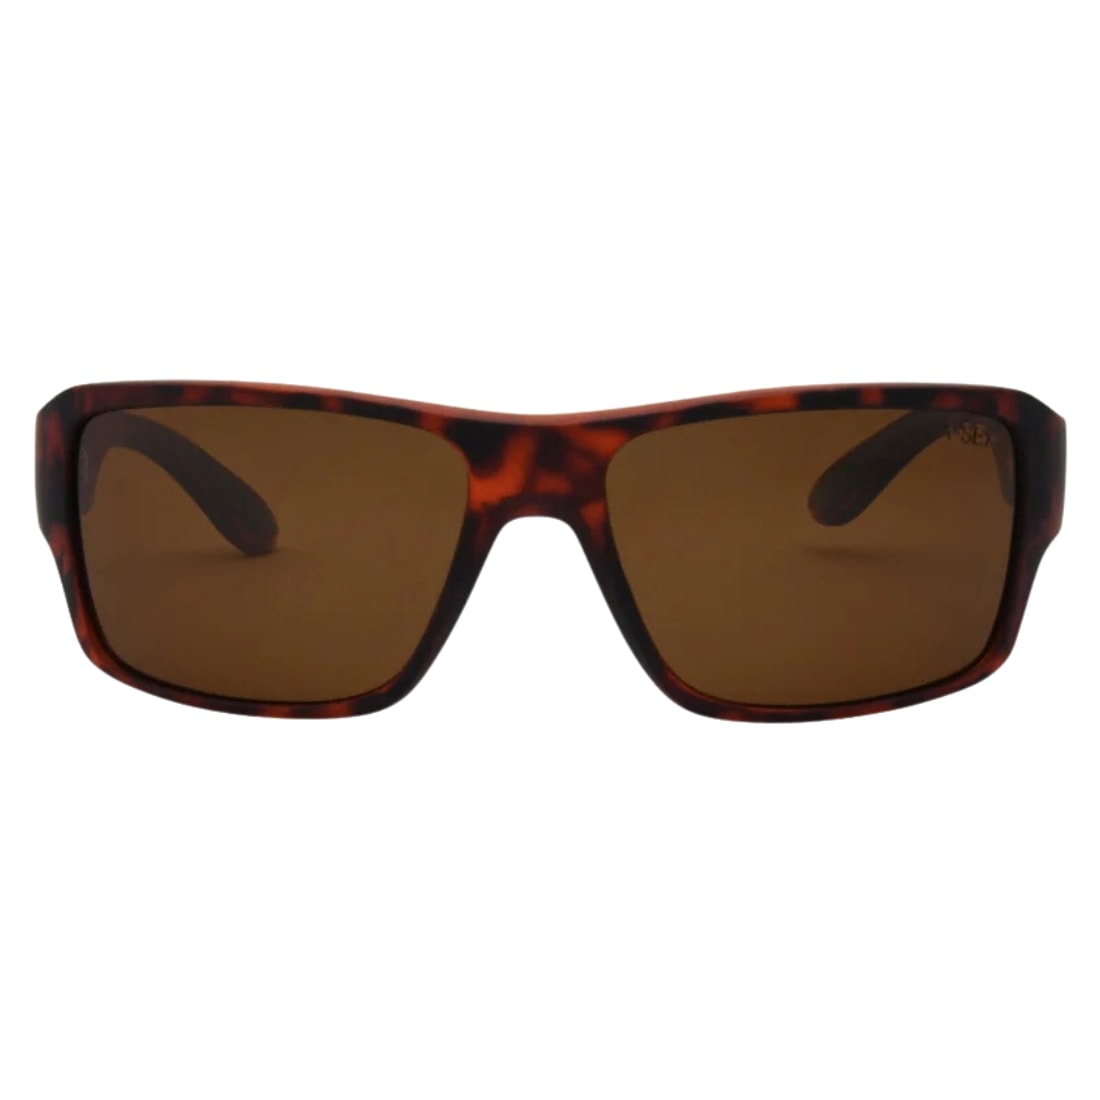 I-Sea Freebird Polarised Sunglasses - Tort Rubber/Brown Polarized - Square/Rectangular Sunglasses by I-Sea